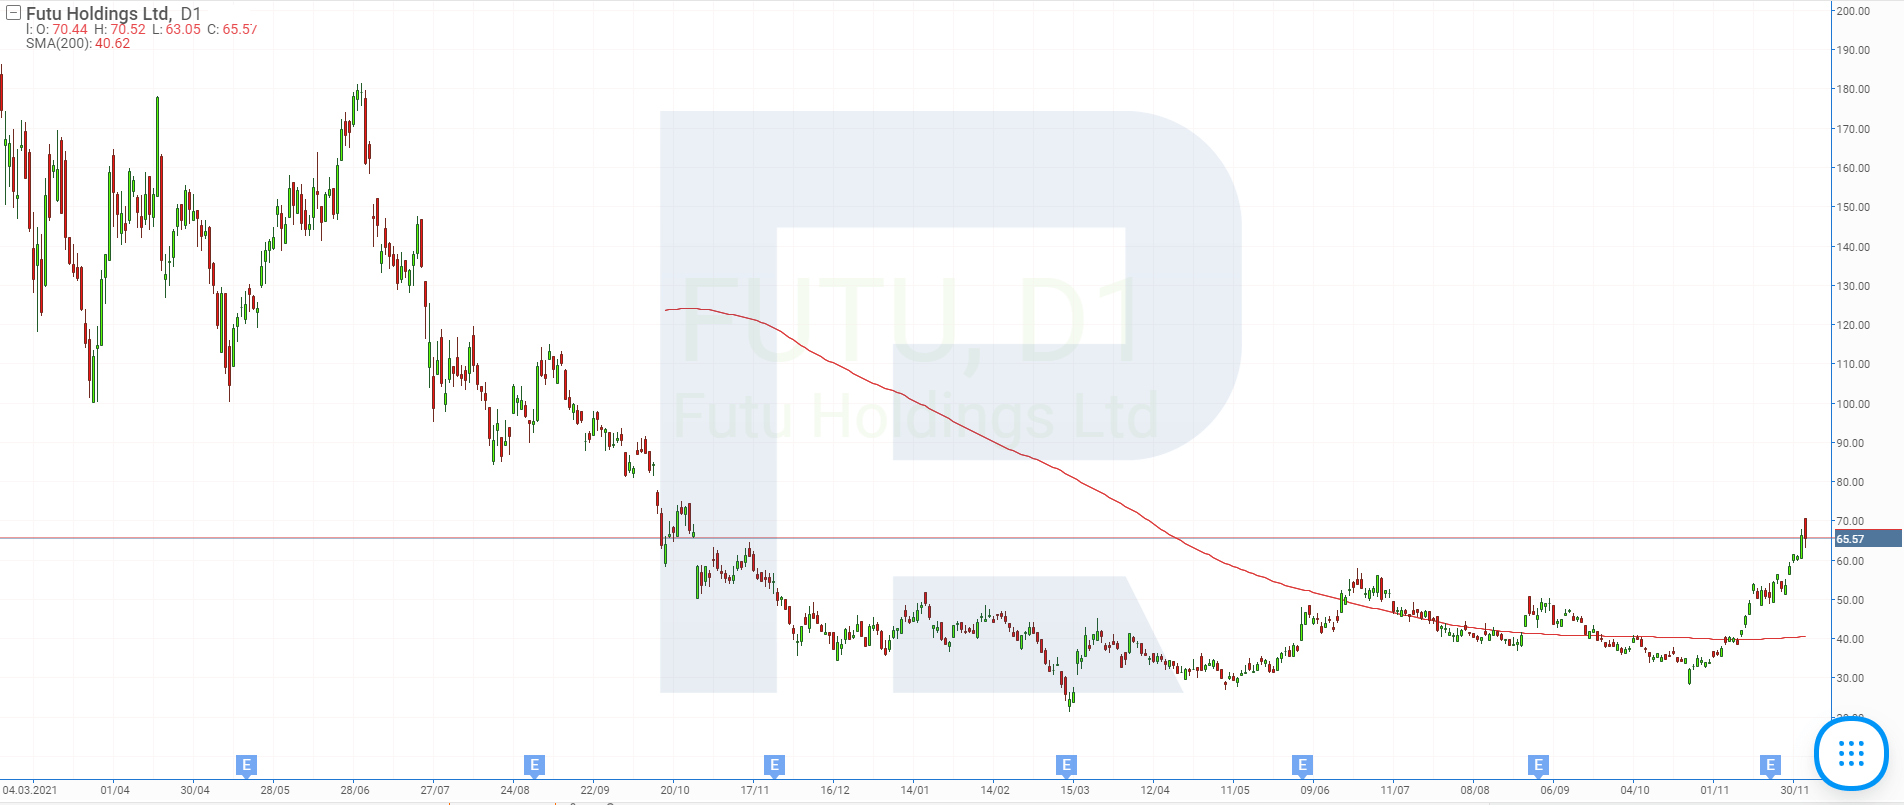 Stock price charts of Futu Holdings